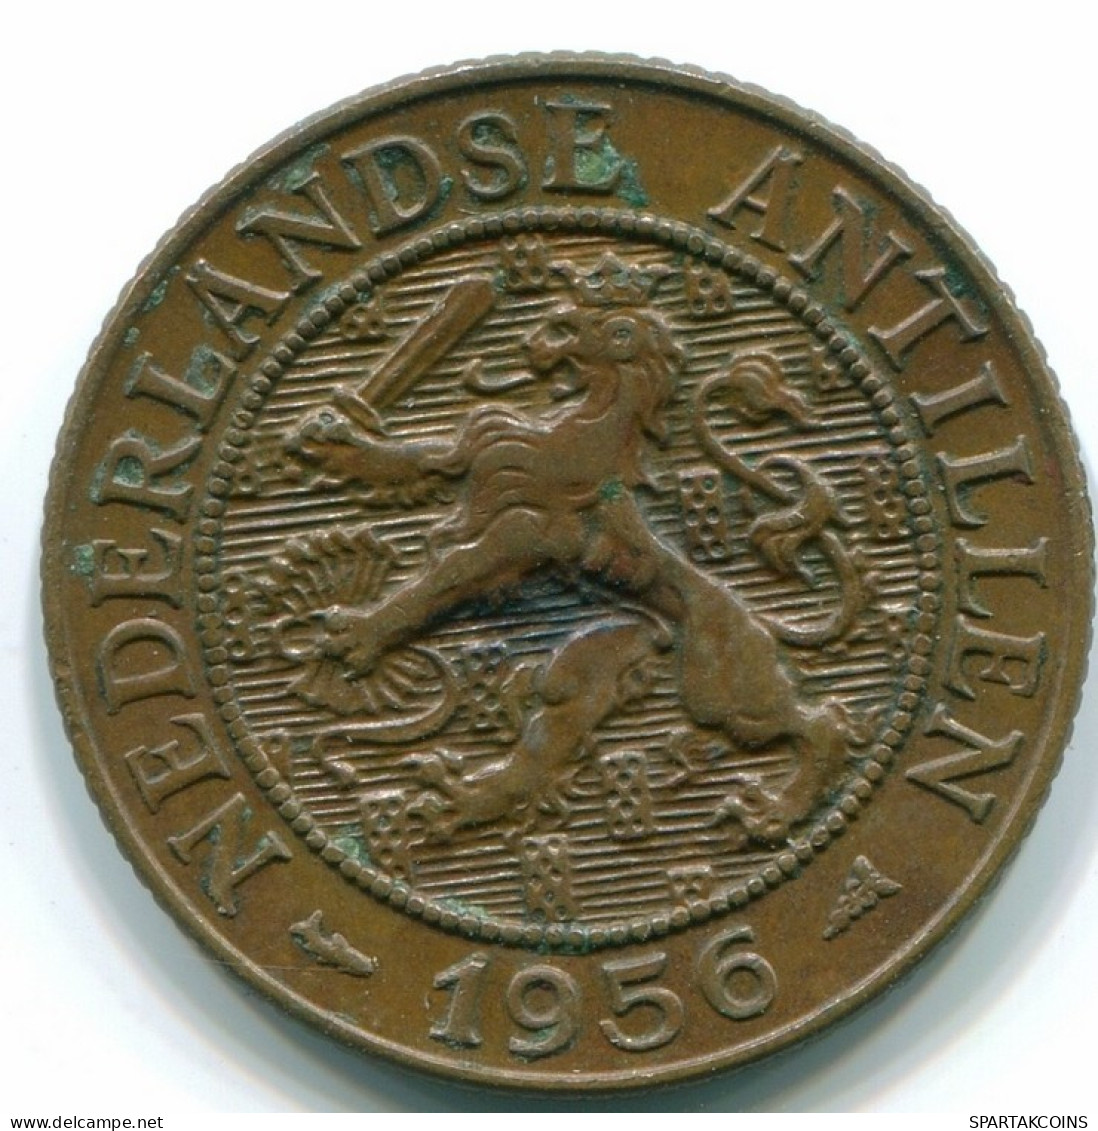 2 1/2 CENT 1956 CURACAO Netherlands Bronze Colonial Coin #S10167.U.A - Curaçao